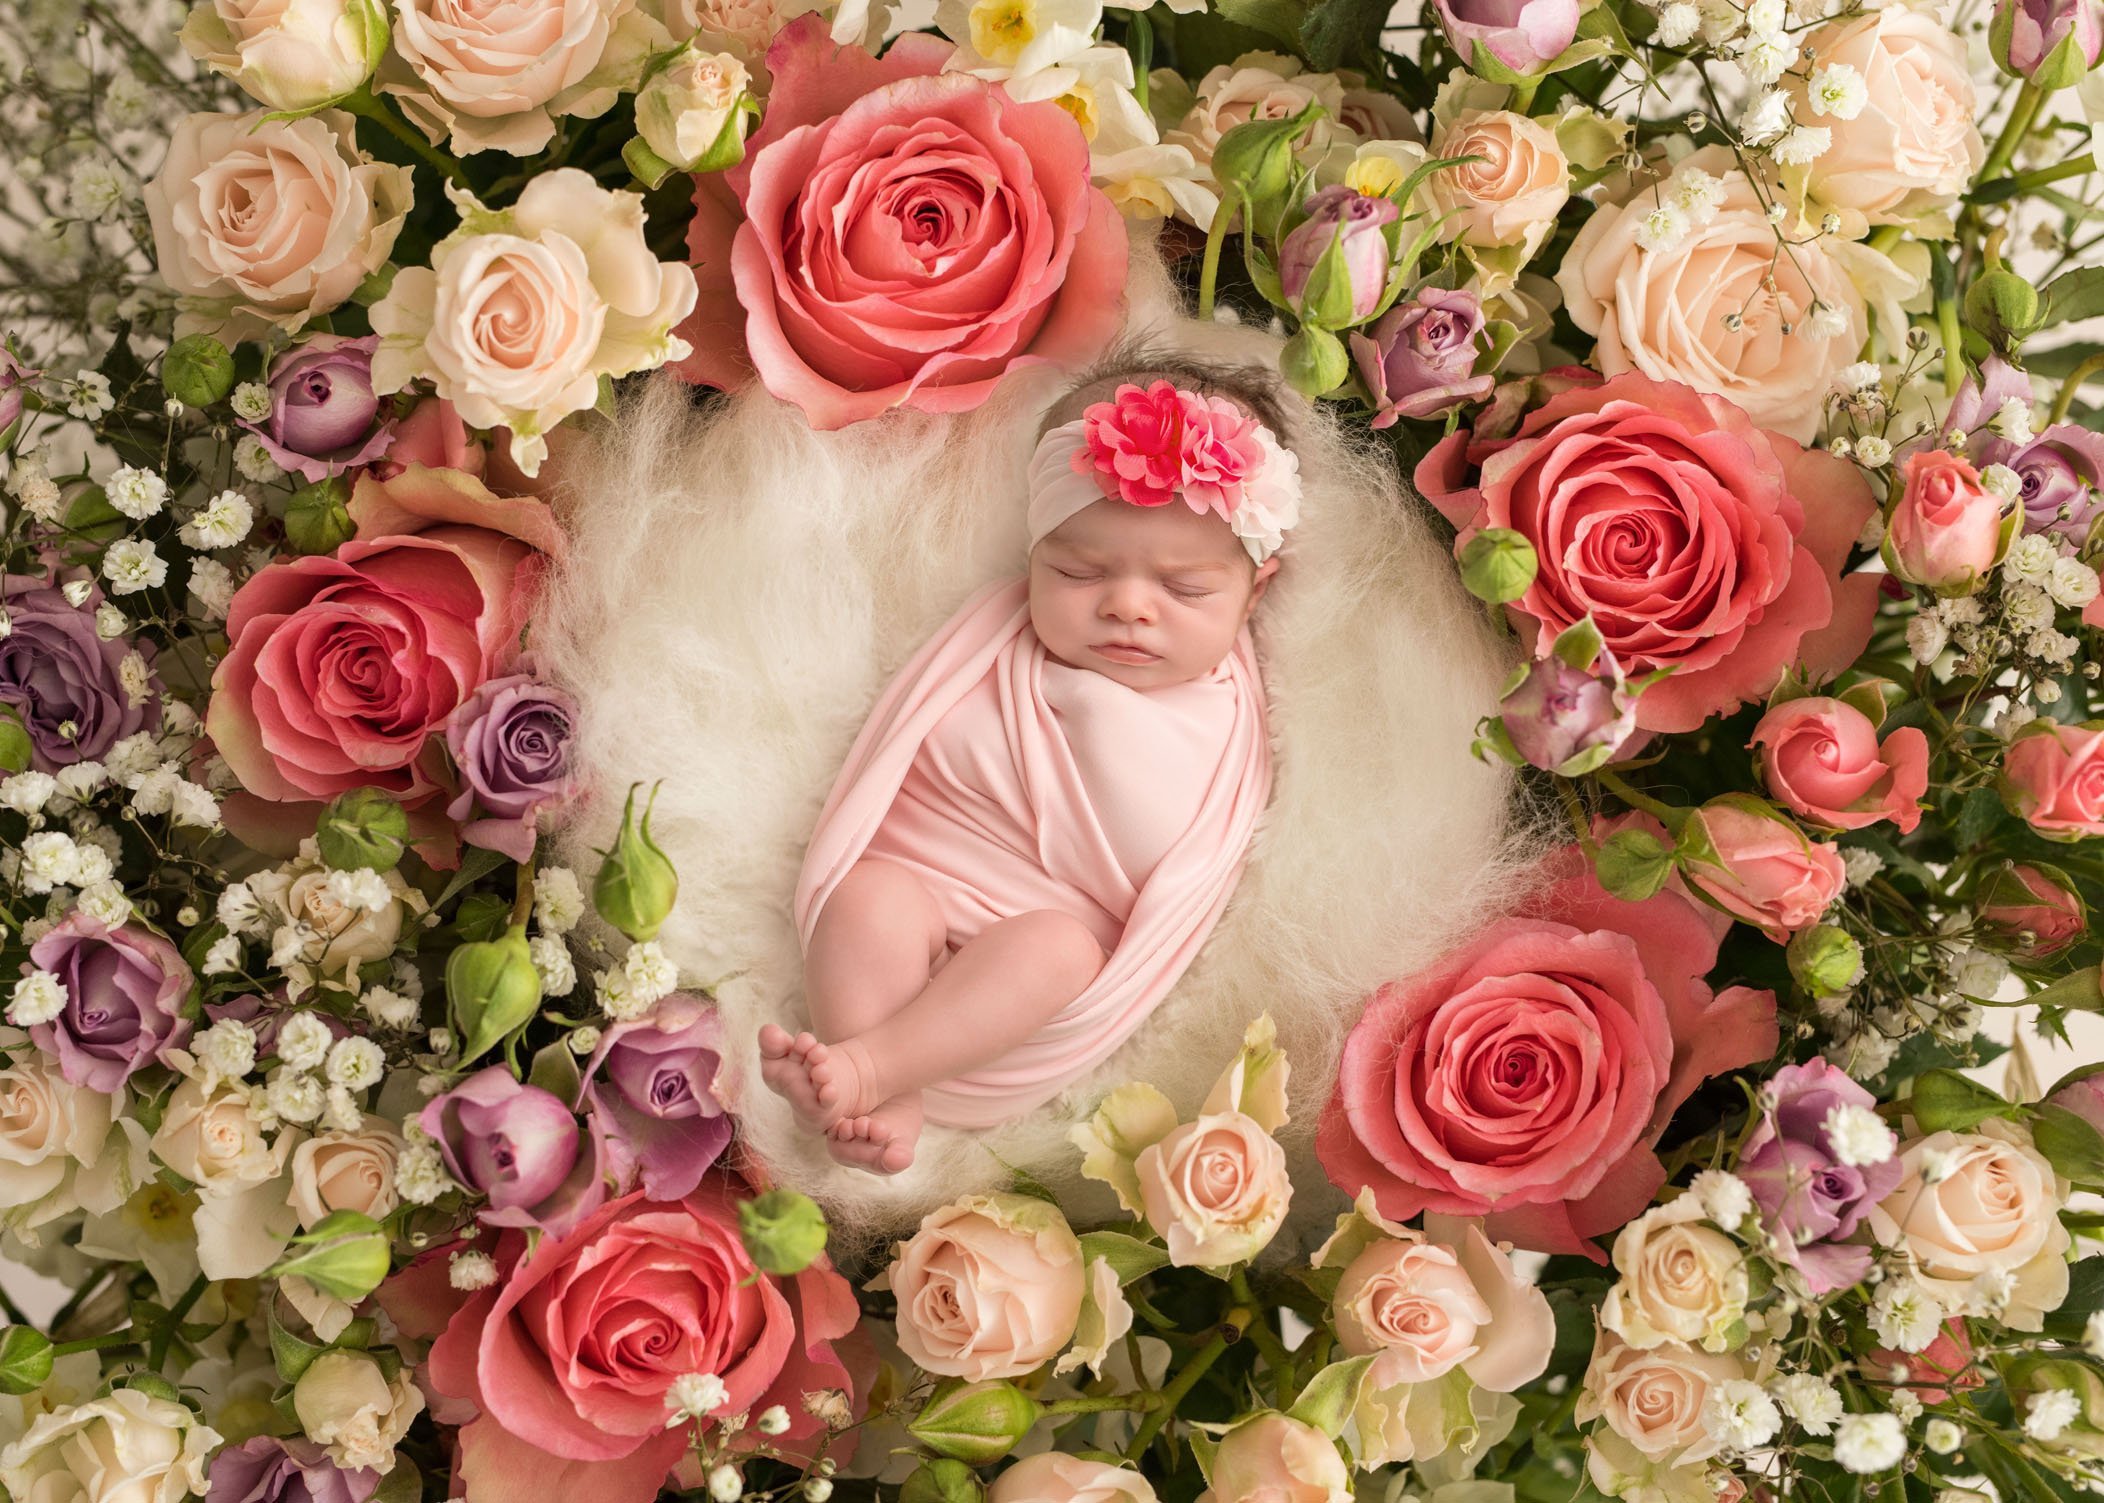 newborn baby girl sleeping in bed of roses